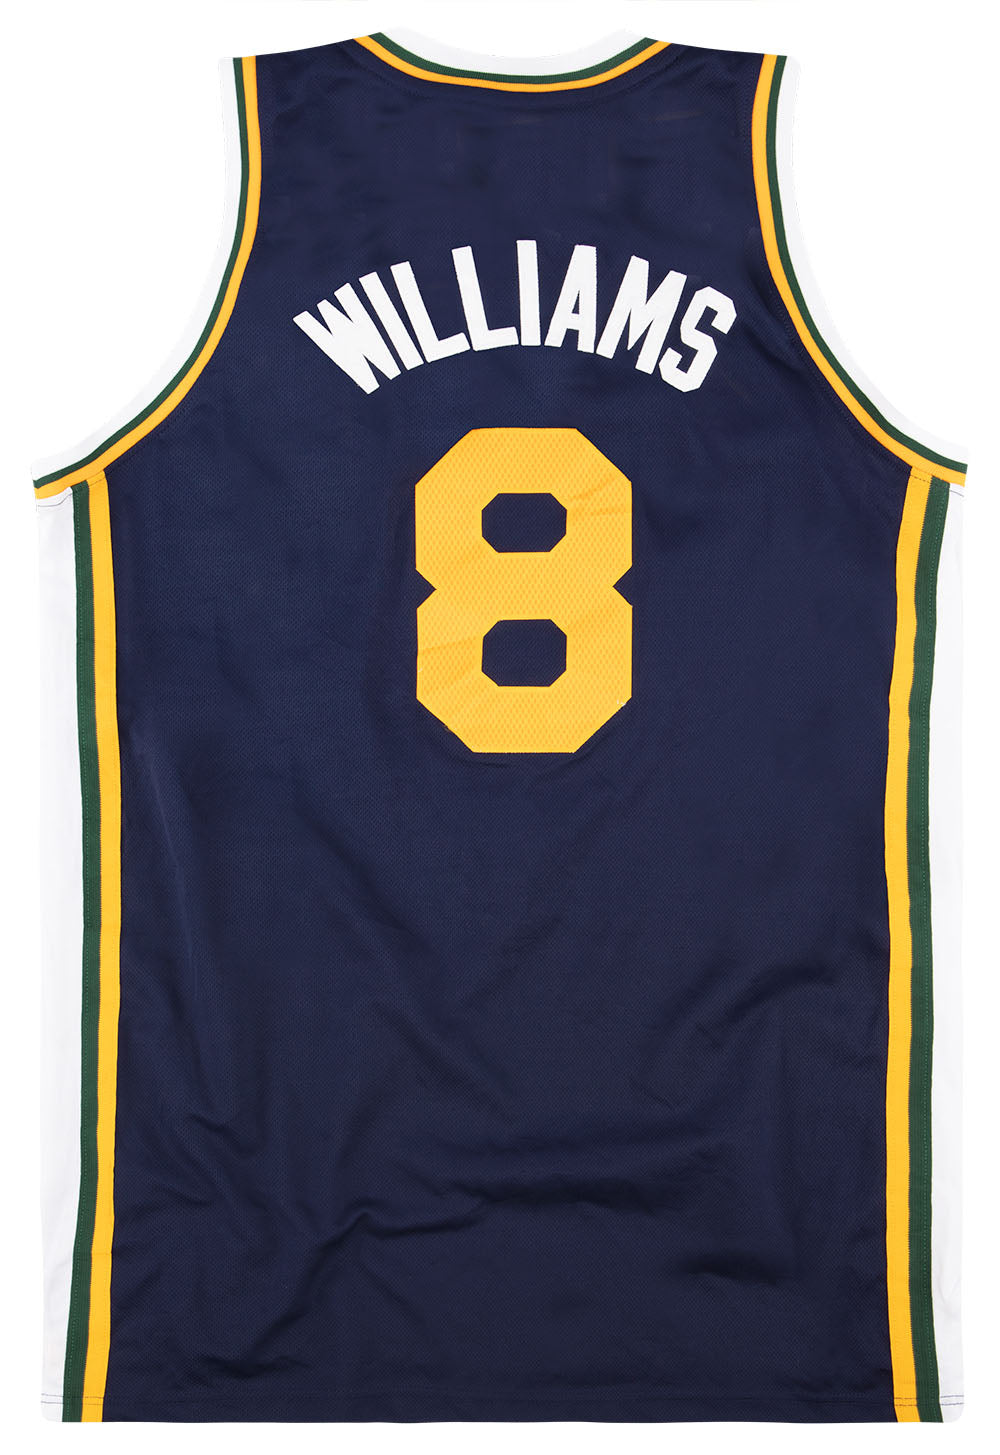 Wholesale Adidas Utah Jazz Jerseys,2013 Shop Online NBA Jerseys Wholesale